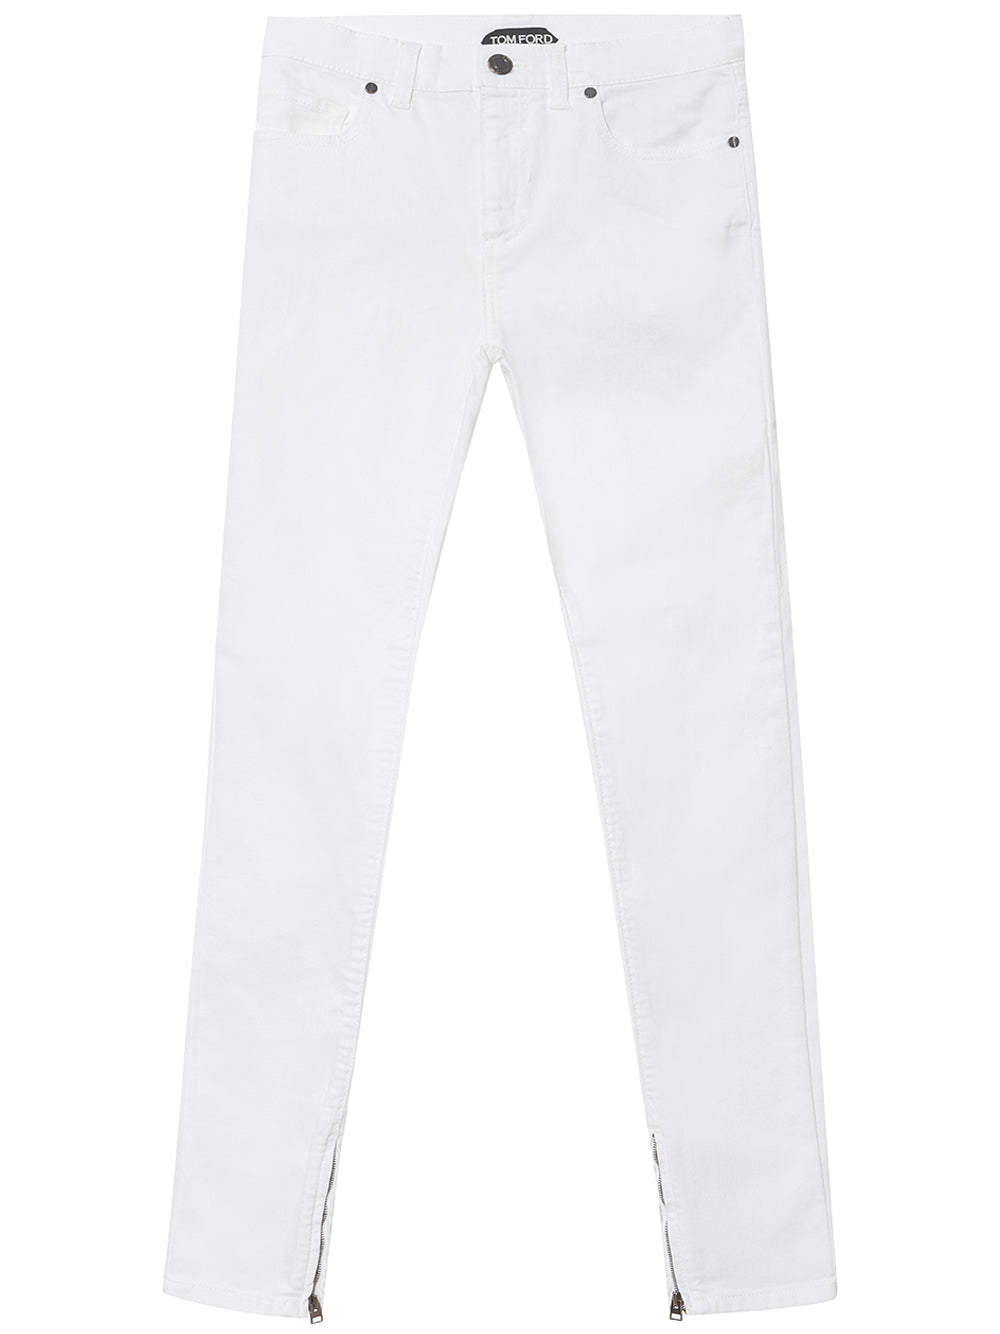 Tom Ford White Skinny Jeans